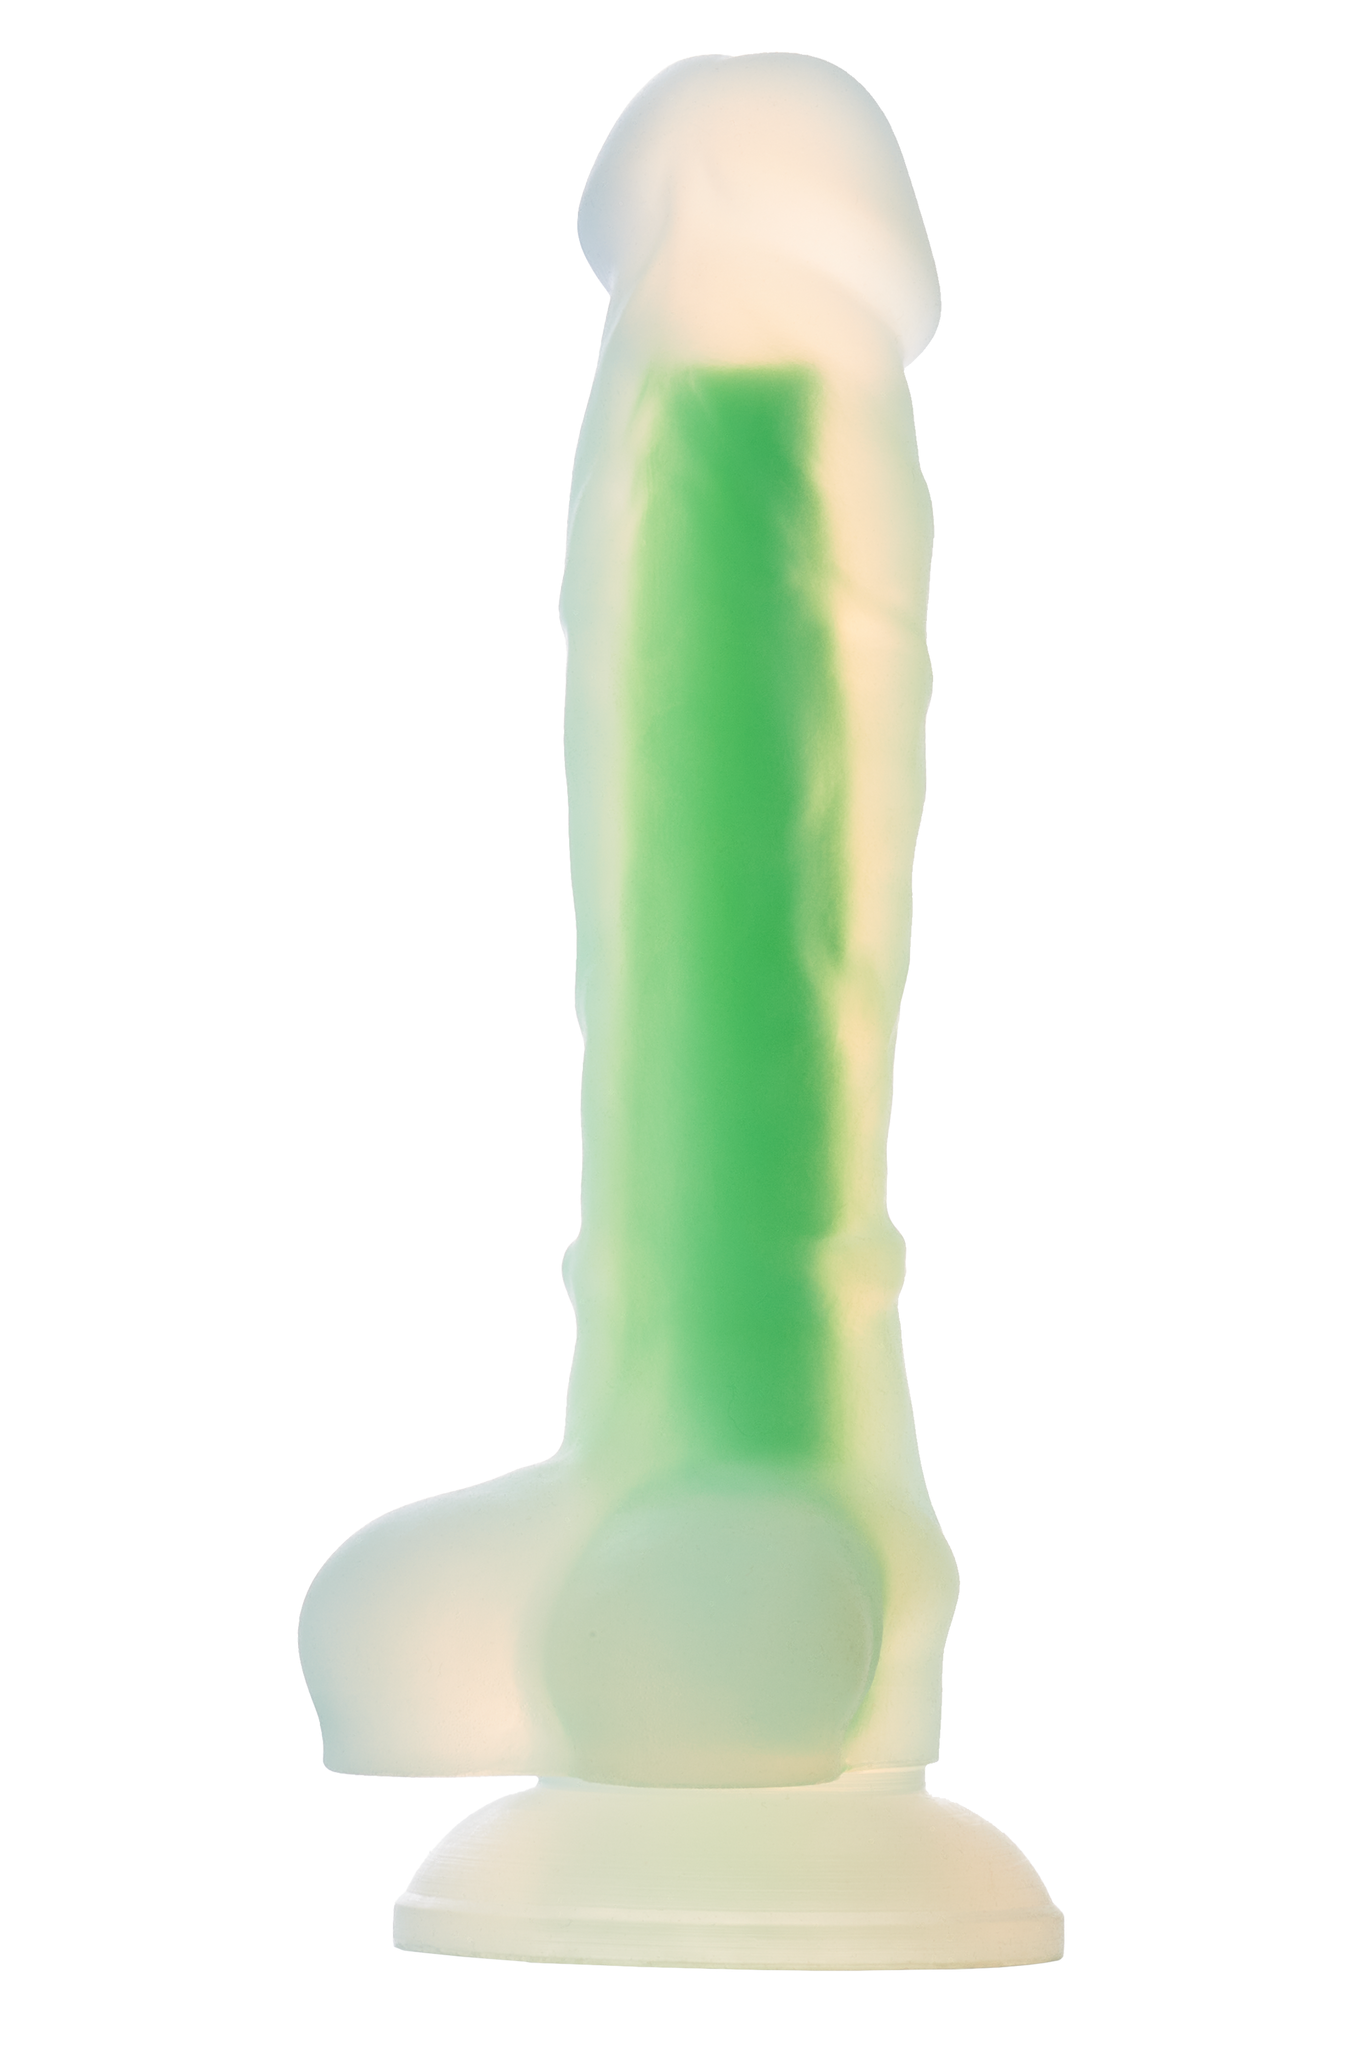 Radiant - Glow-in-the-dark dildo, Small, Green